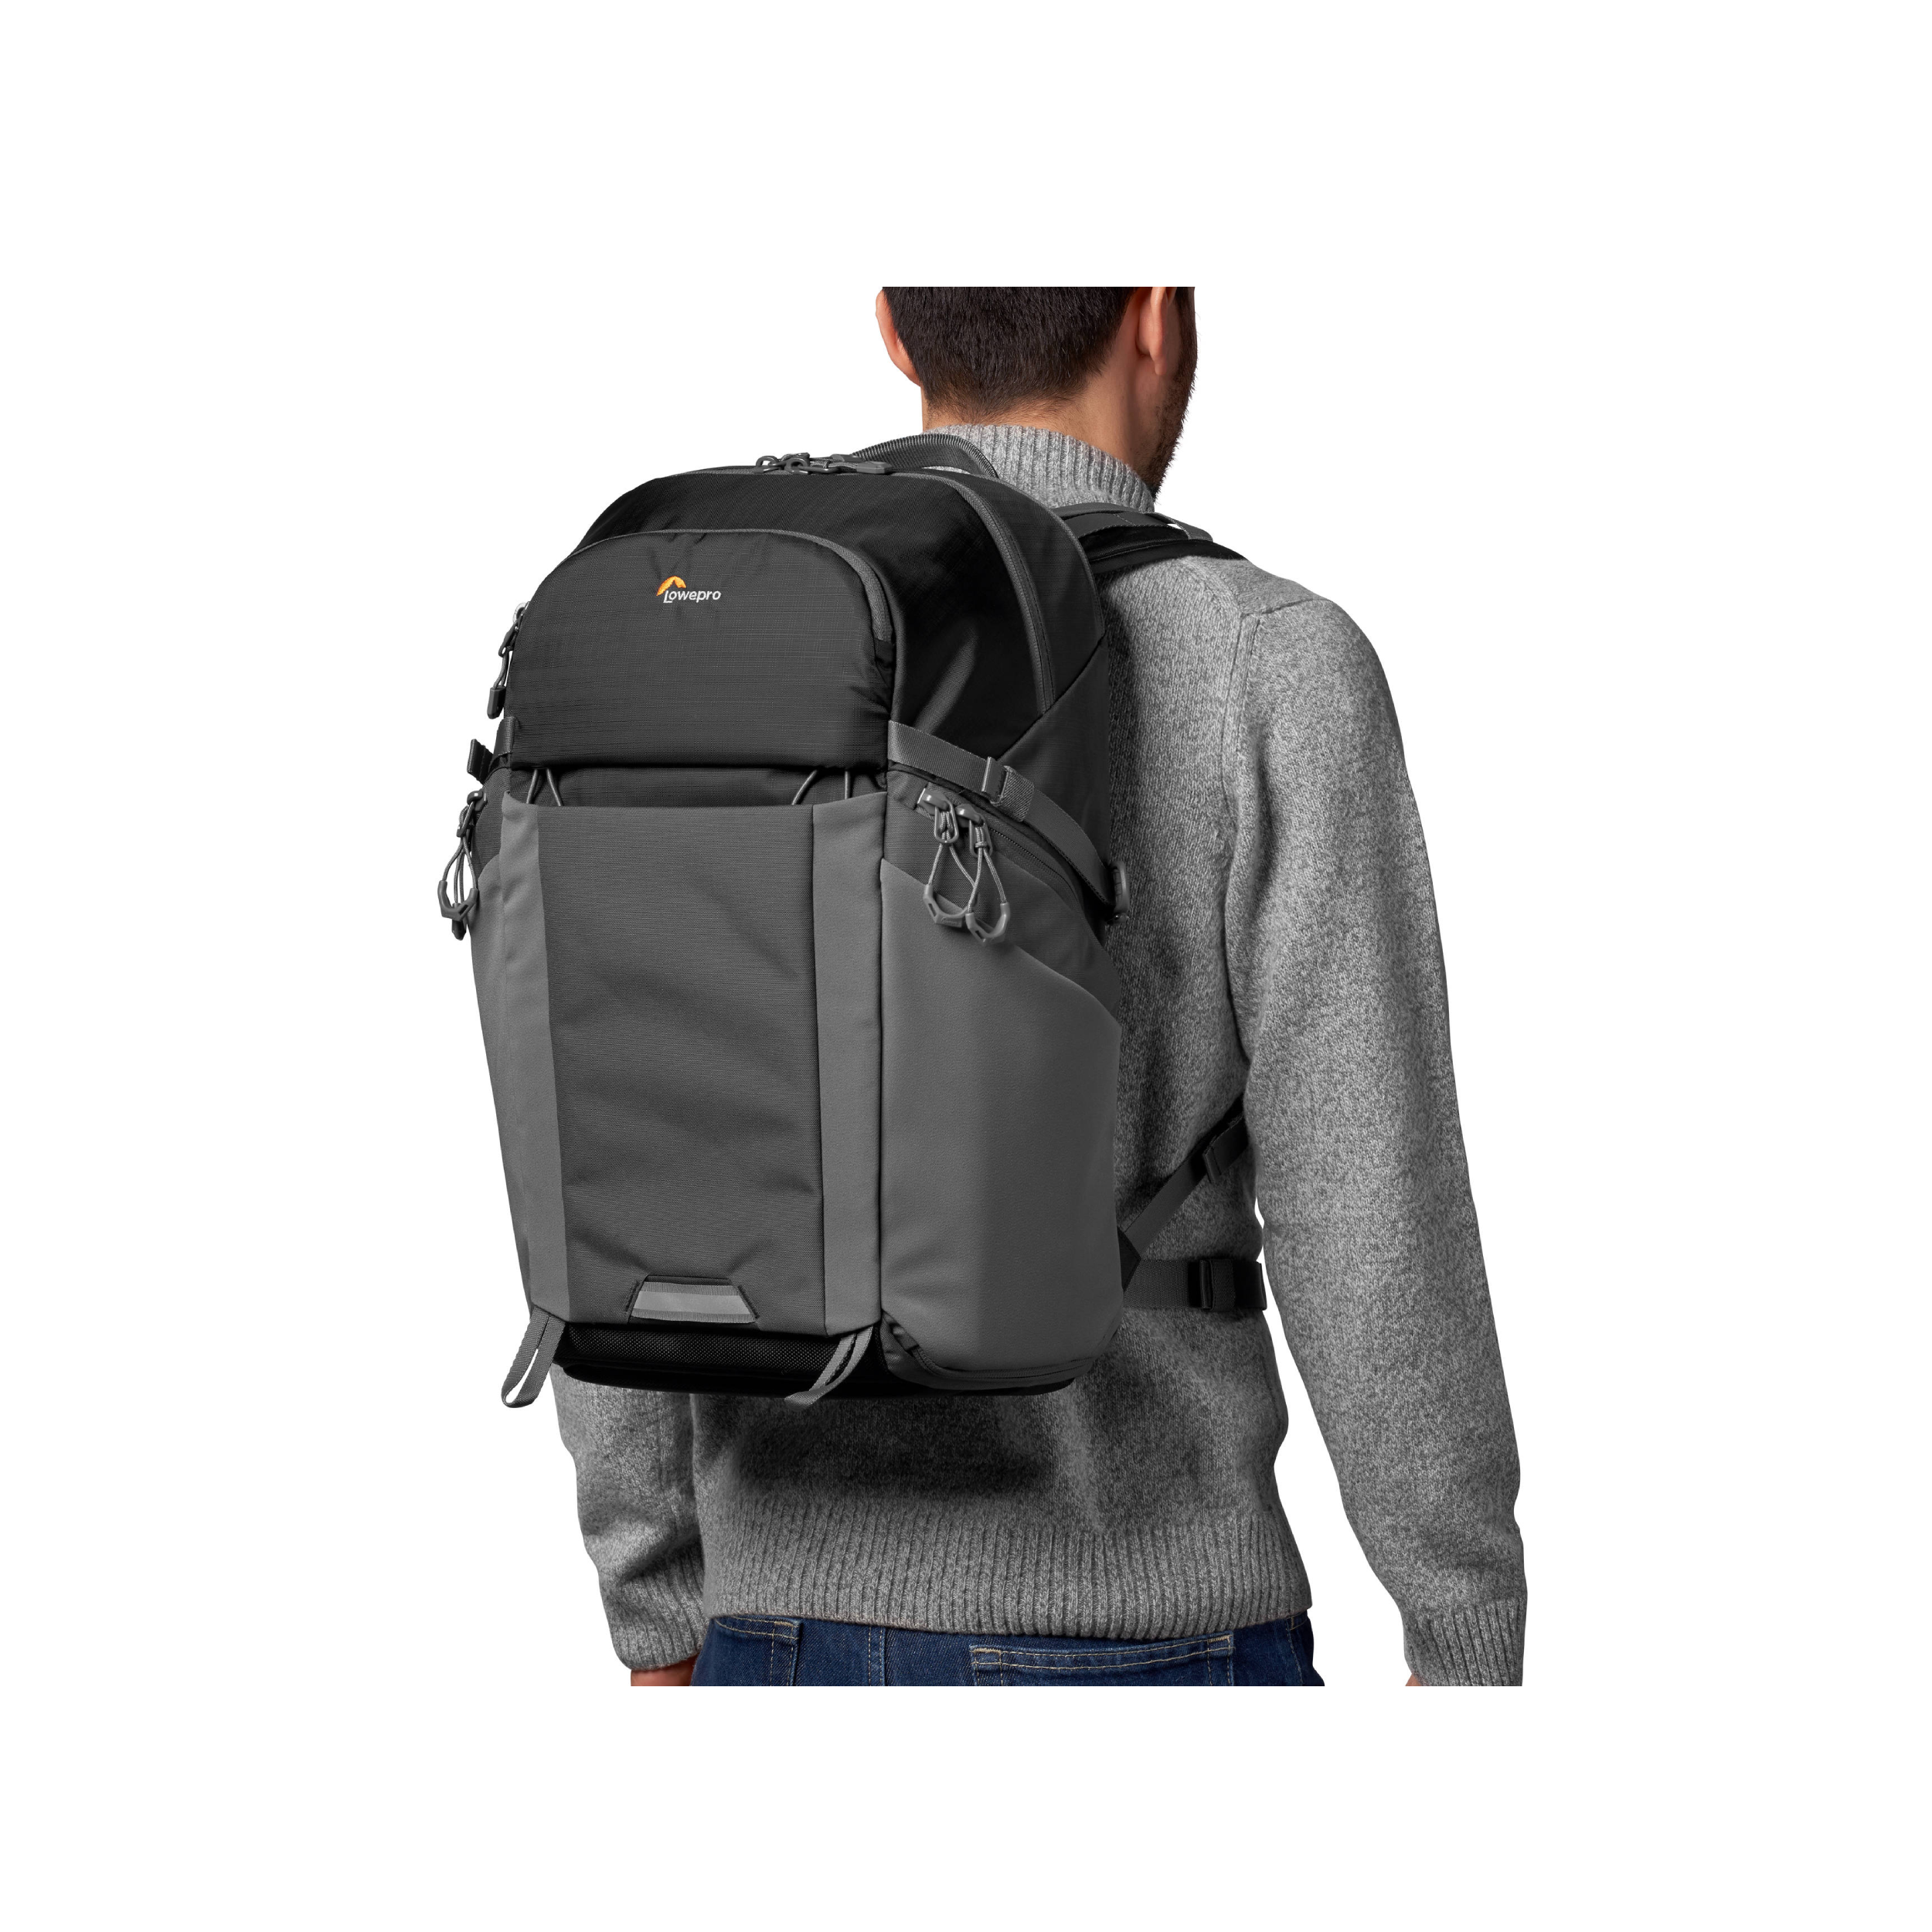 Lowepro Photo Active BP Backpack